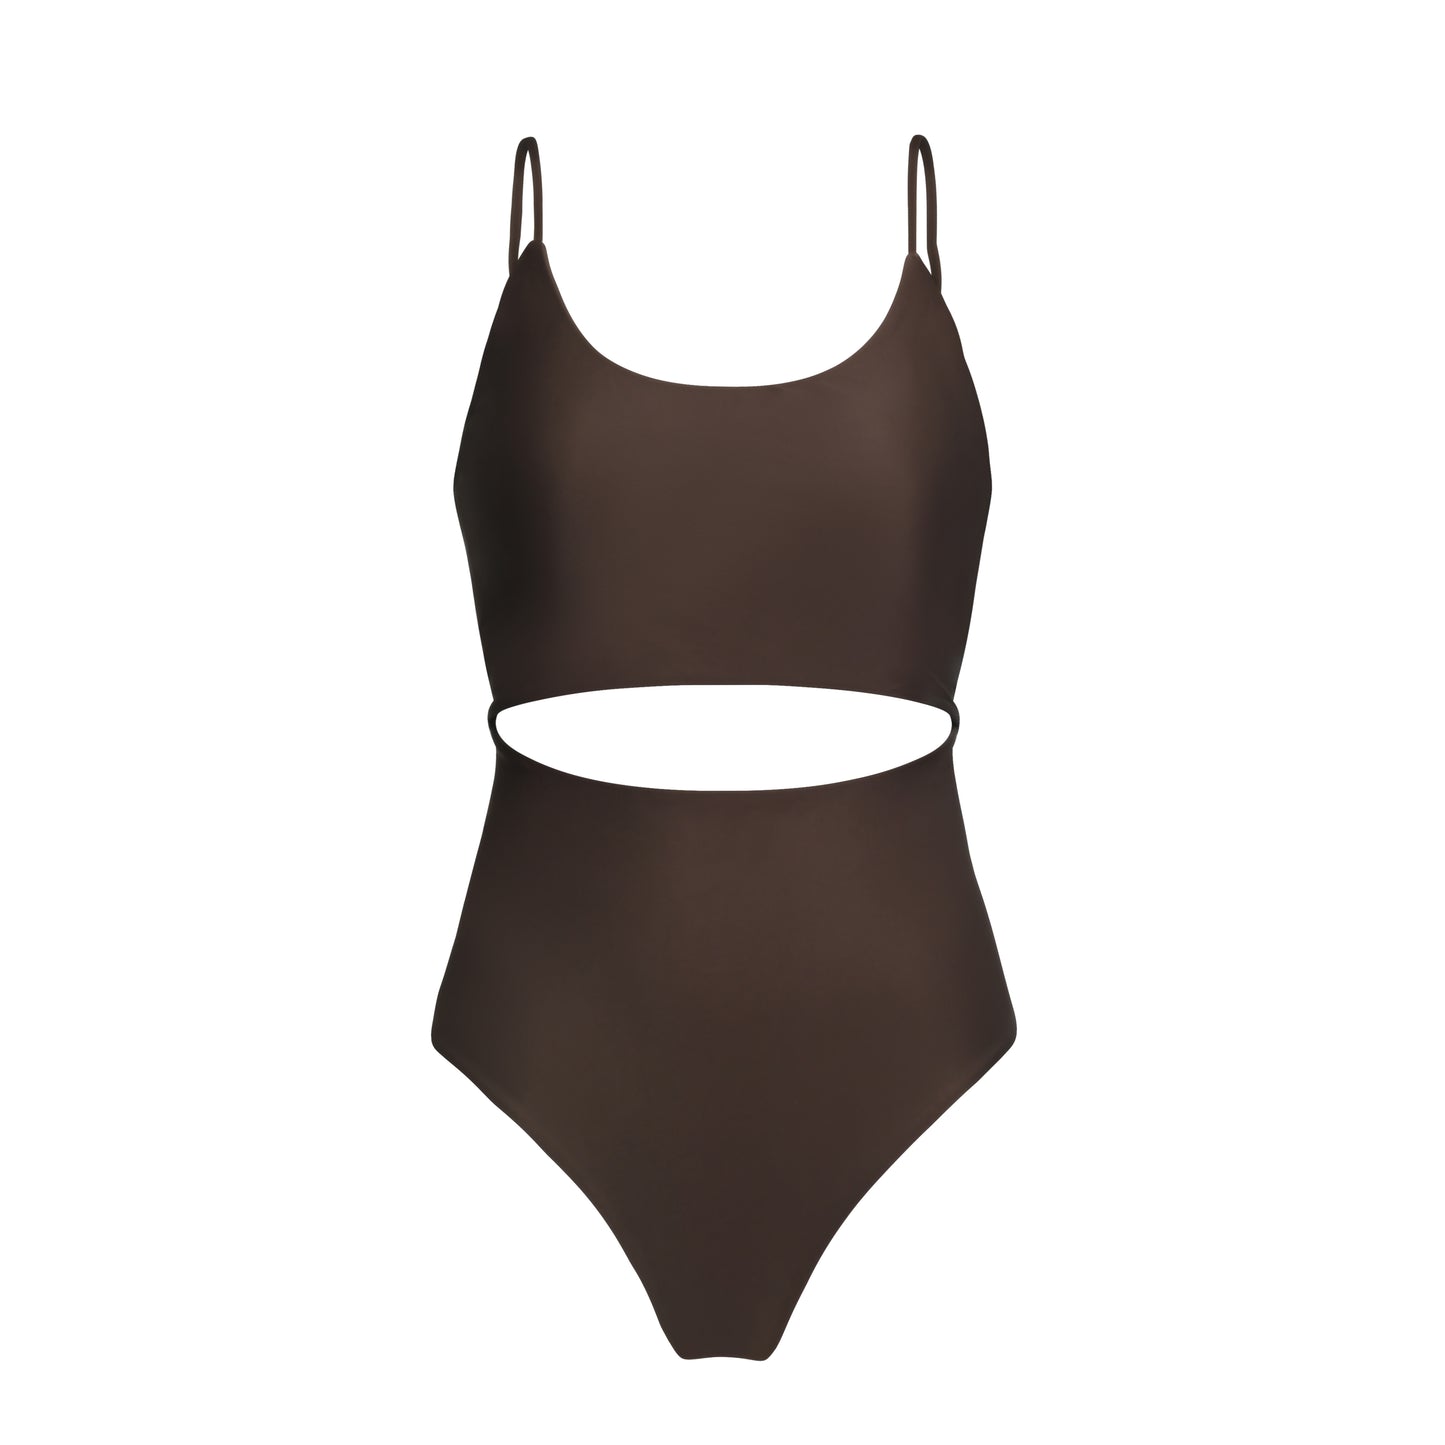 swimsuit one piece brown chocolate espresso surf cutout twist